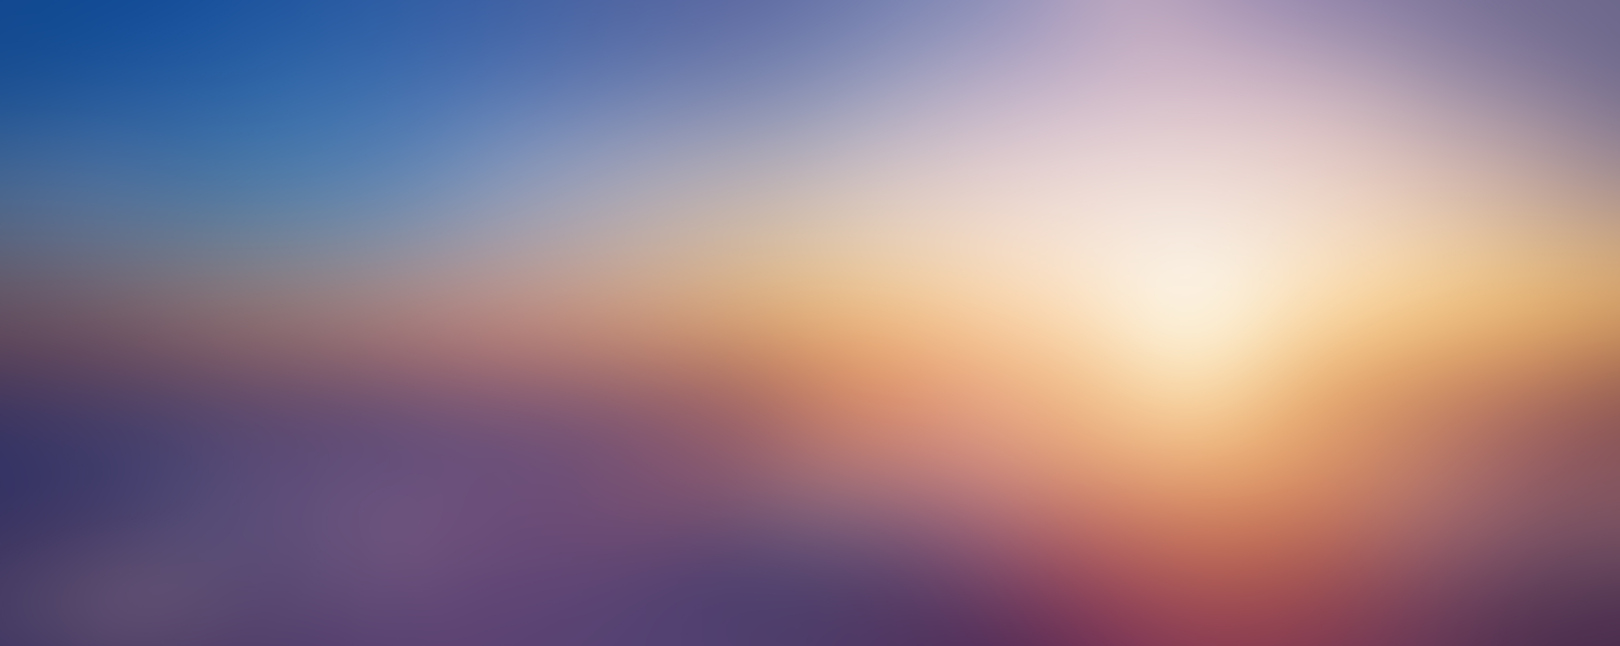 Sunrise blur background panorama